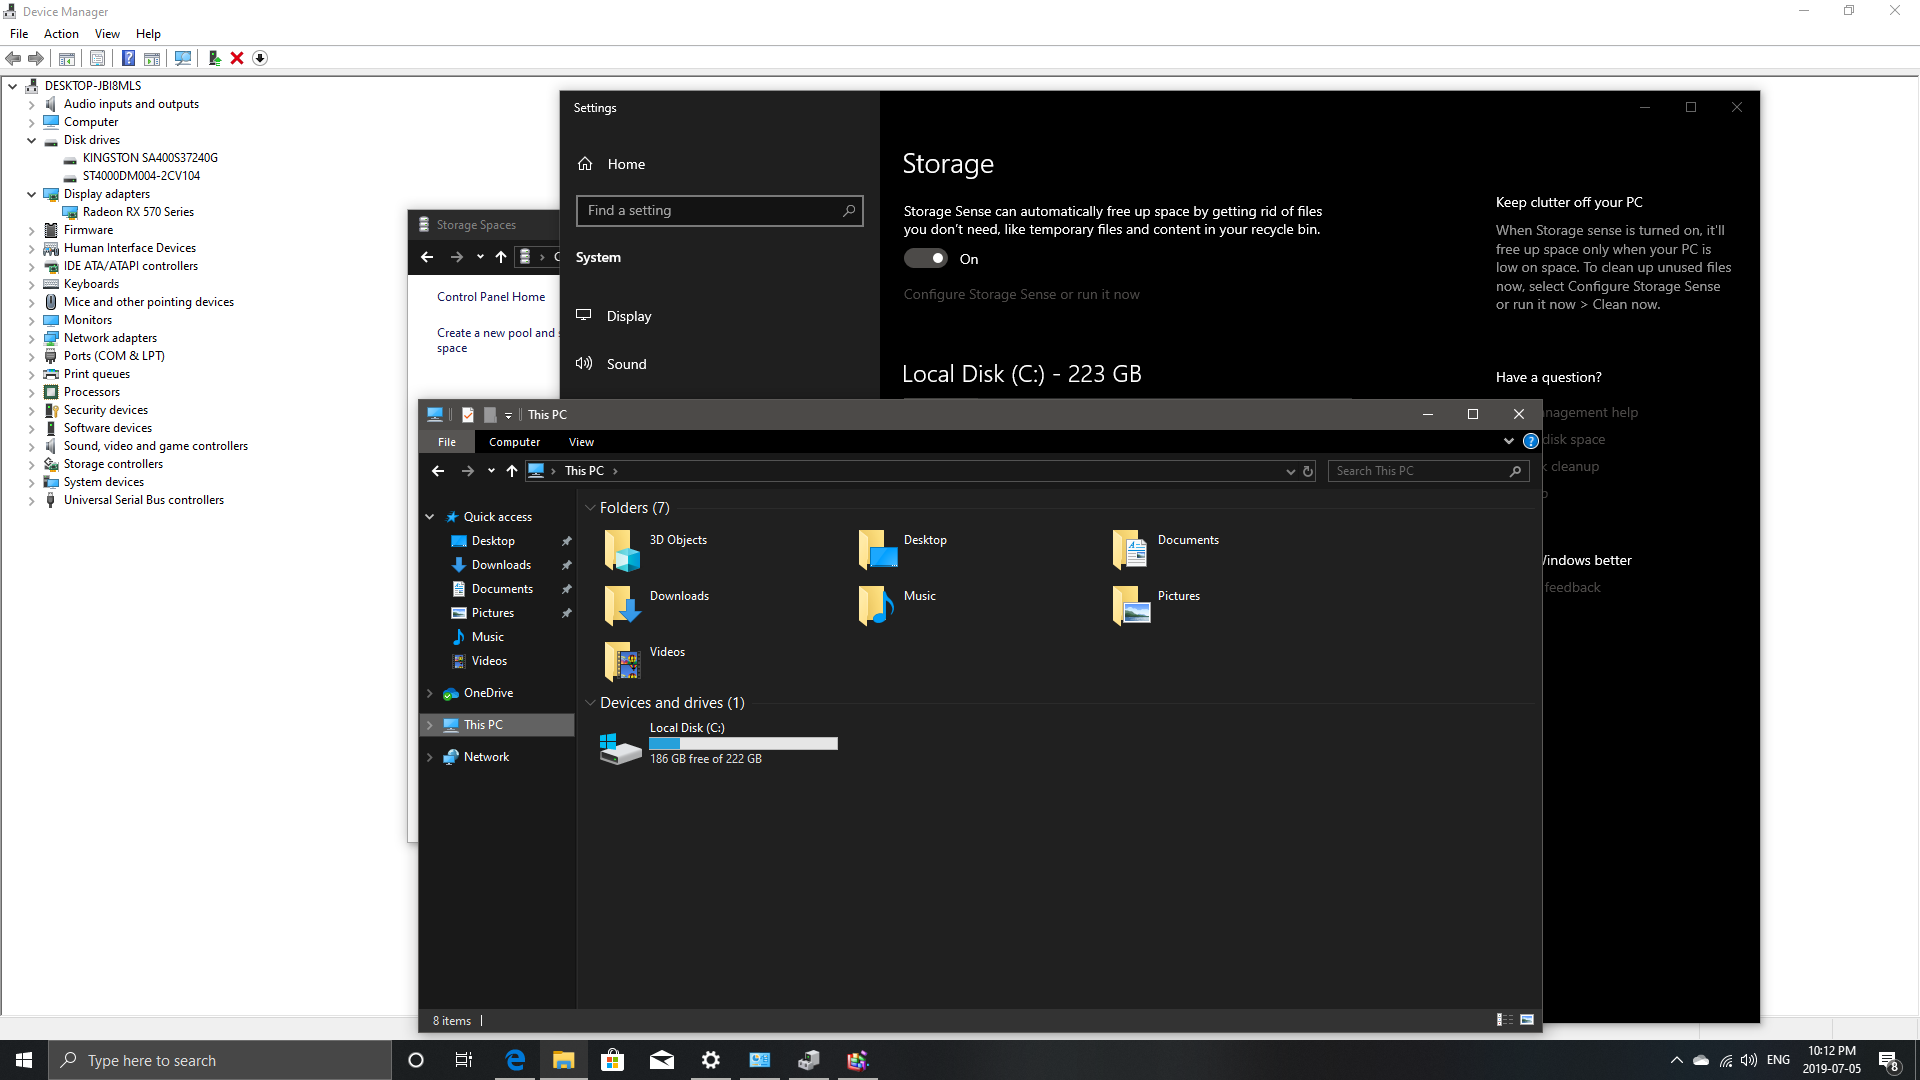 window 10 doesnt recognize my 2nd hard drive 84fec9d0-bd65-45ea-b7b2-410812225e8a?upload=true.png